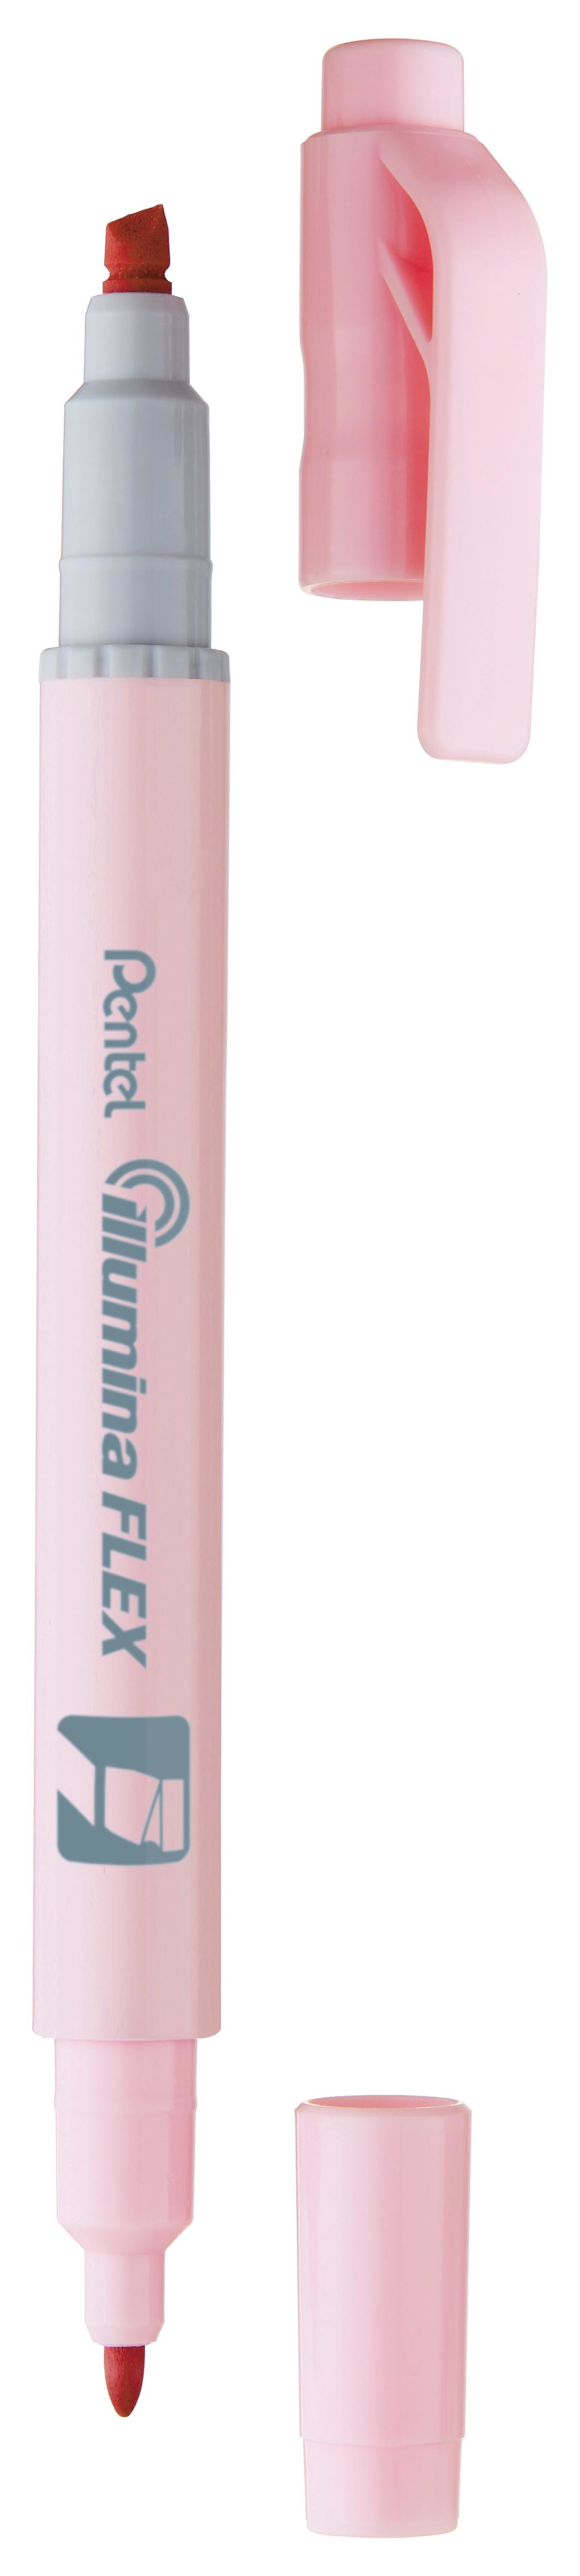 PENTEL Marker illumina FLEX SLW11P-PE rose pastel